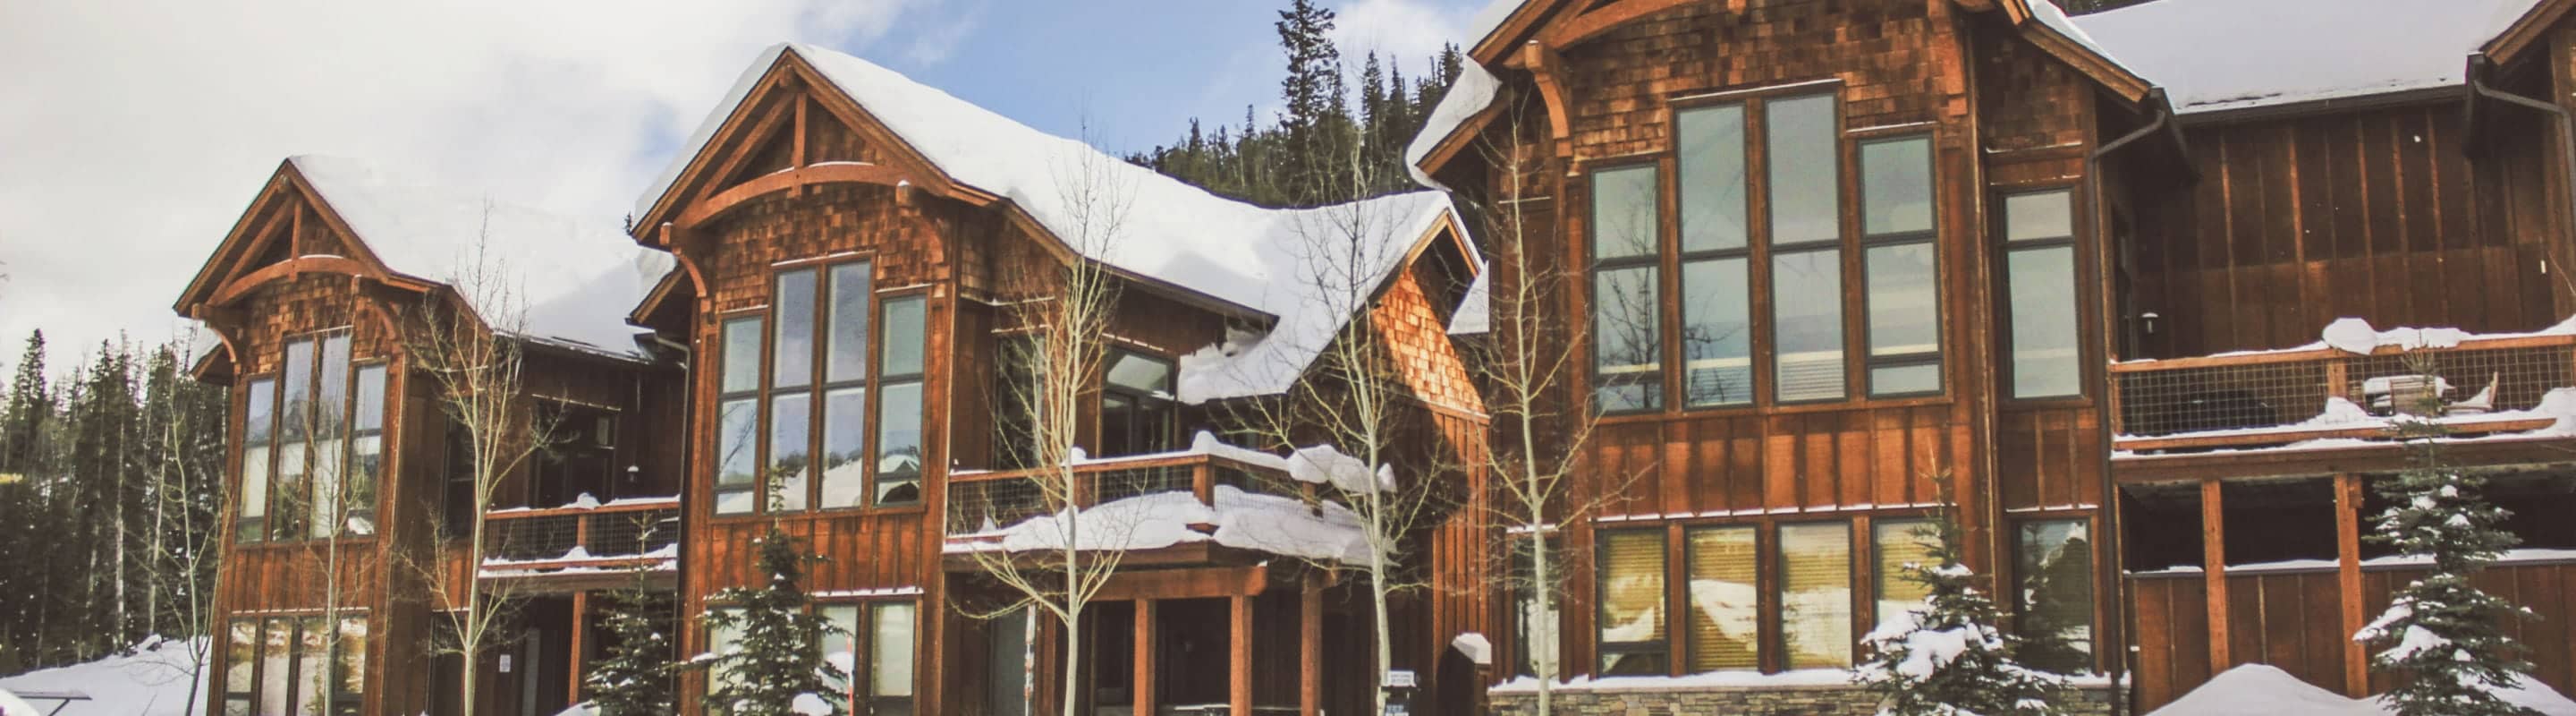 Black Eagle Lodge Rental Condos in Big Sky, Montana